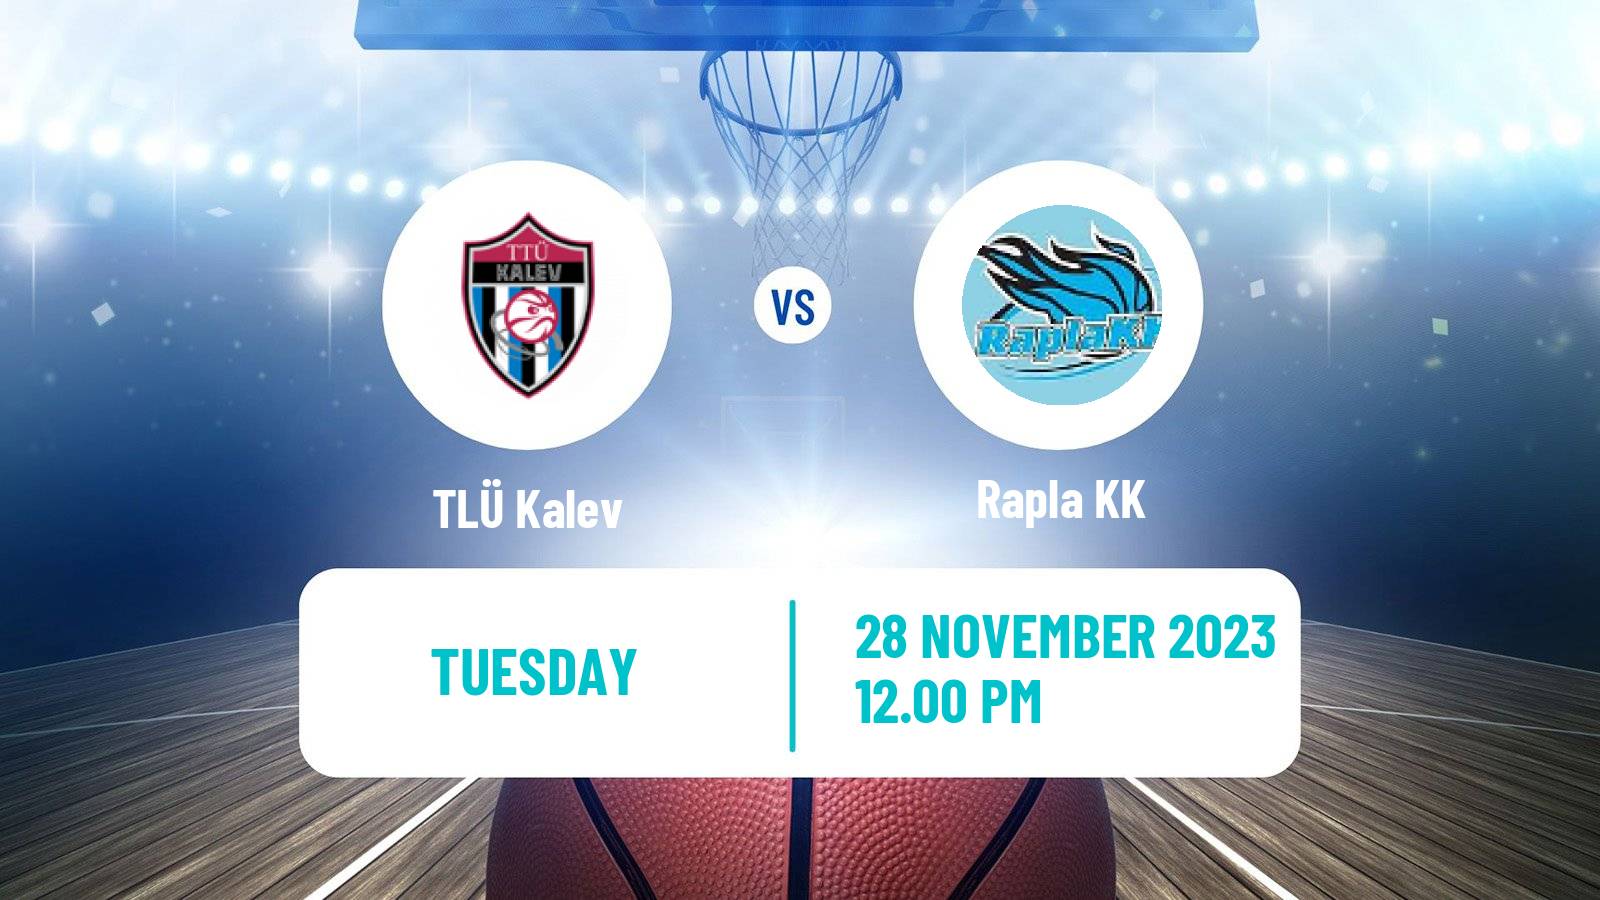 Basketball Estonian–Latvian Basketball League TLÜ Kalev - Rapla